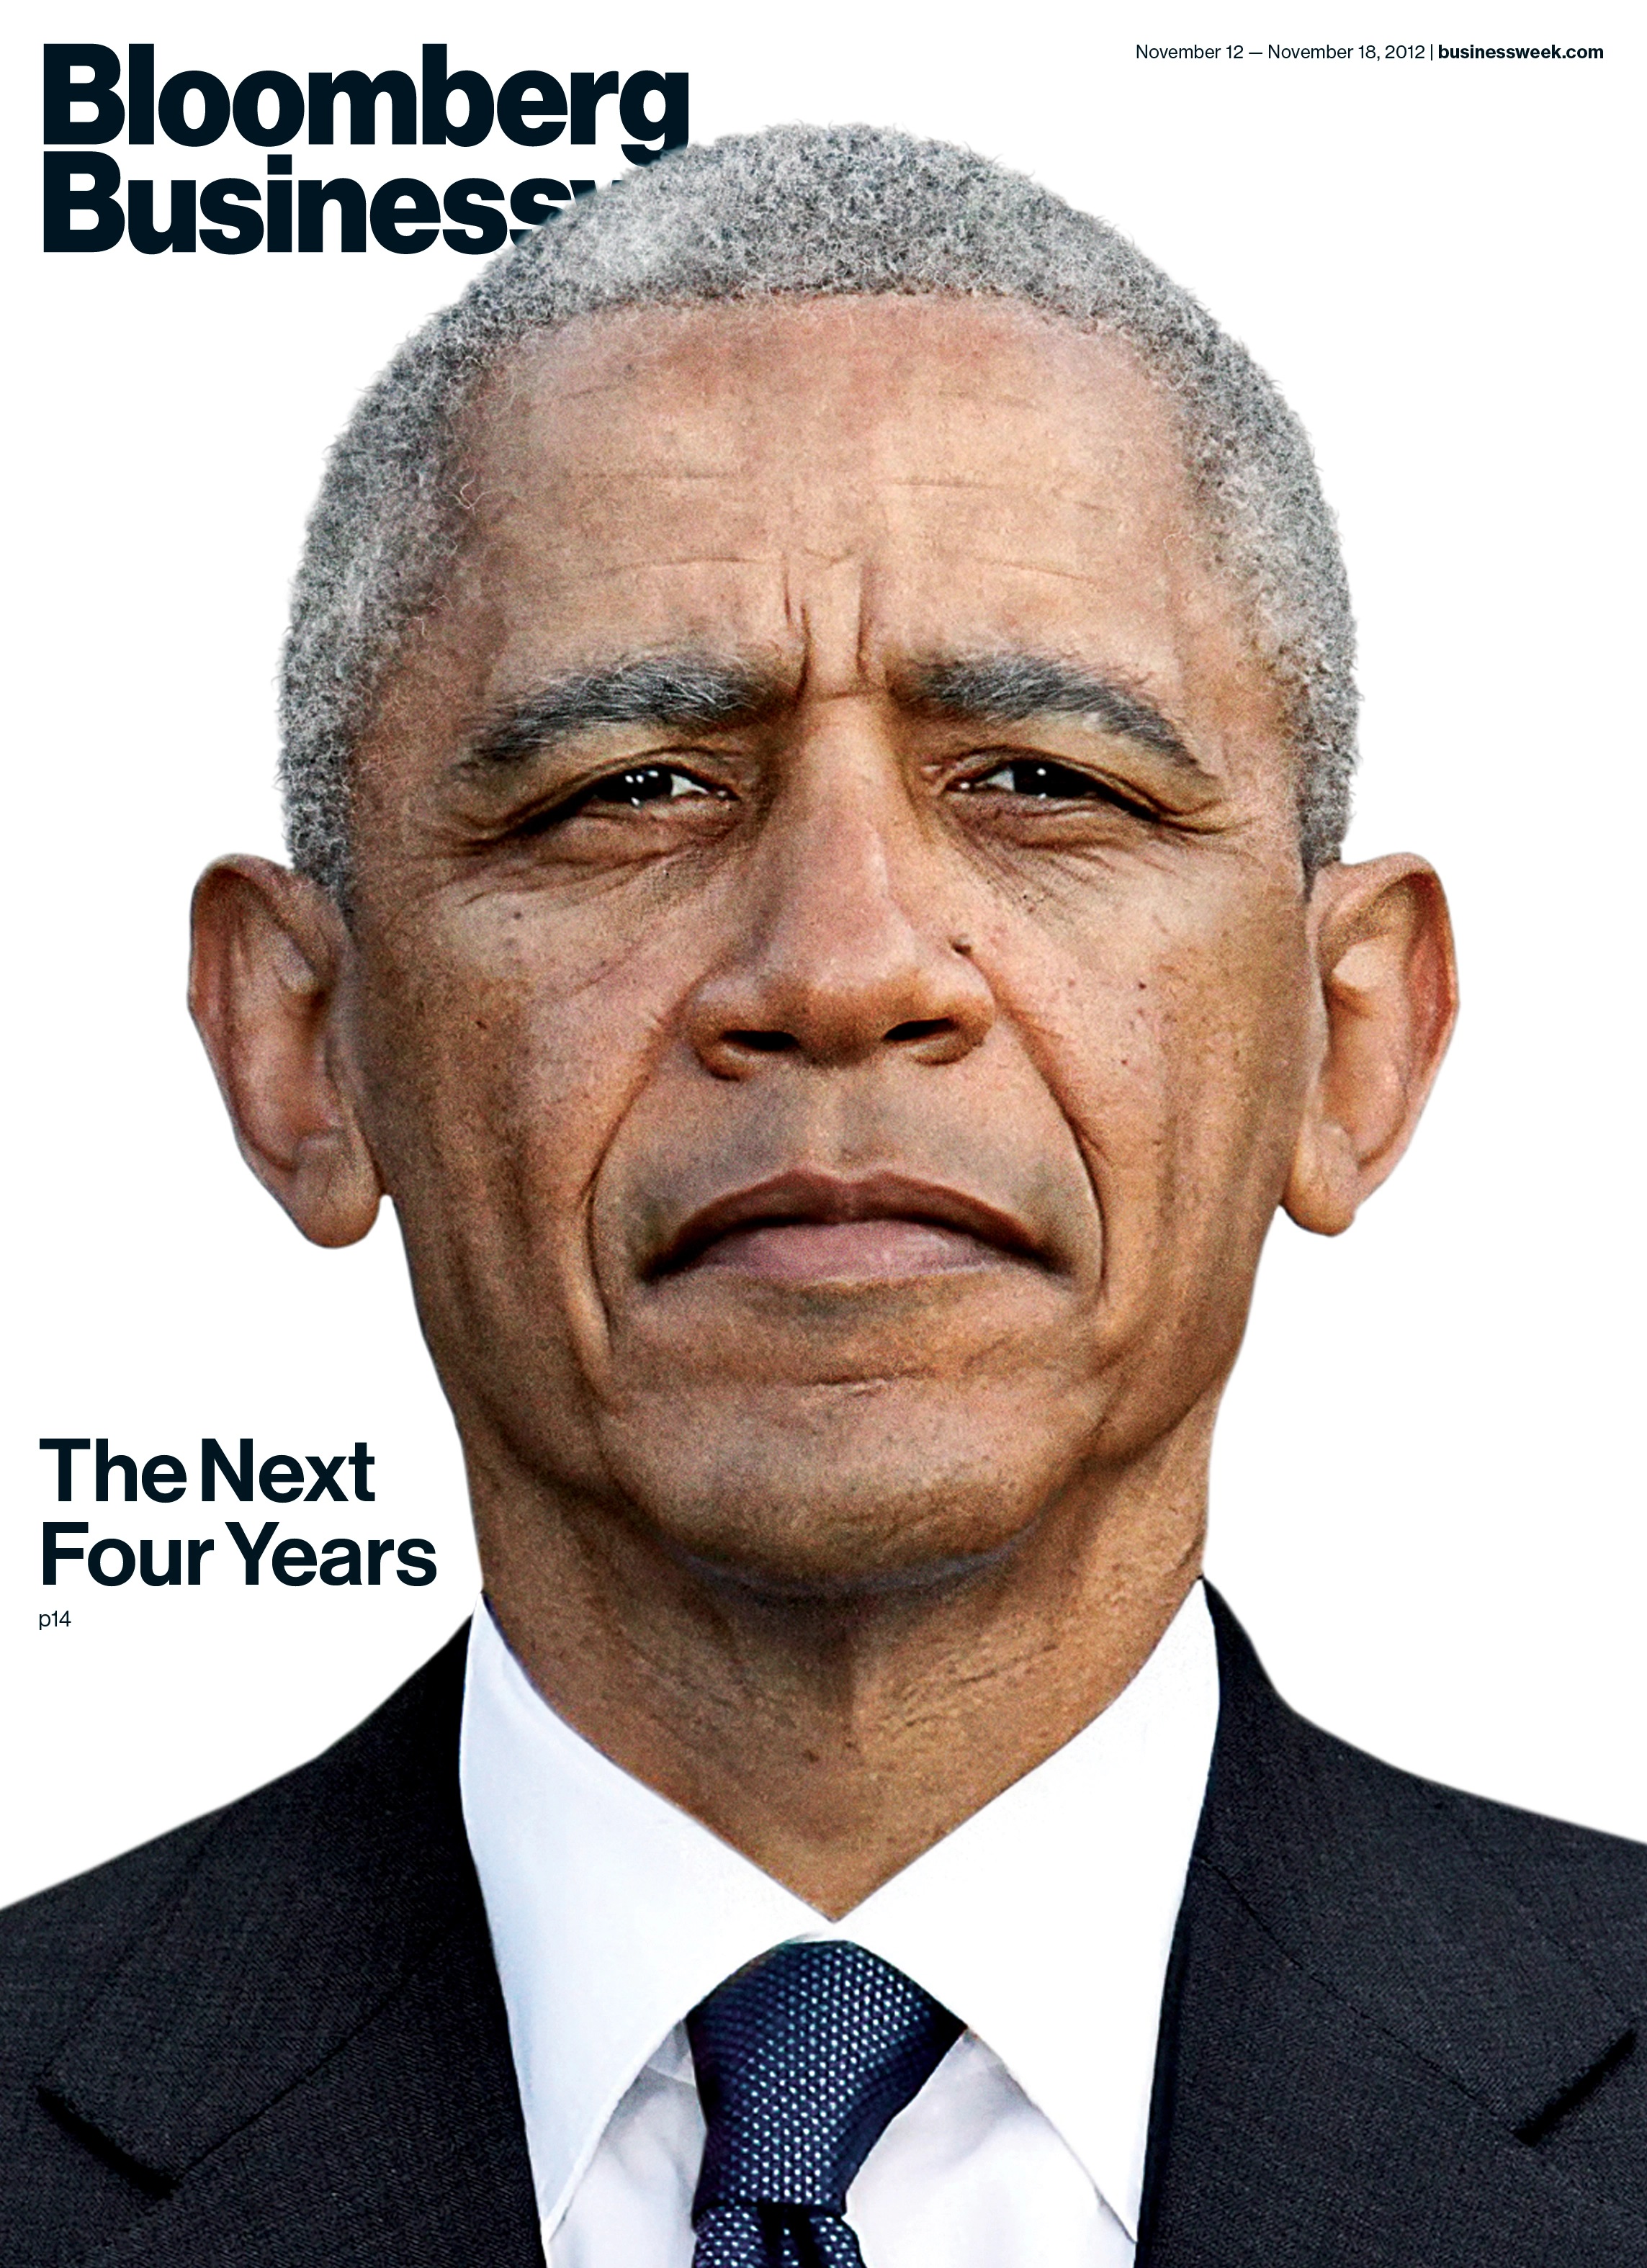 Bloomberg Businessweek-November 12-18, 2012: "The Next Four Years"